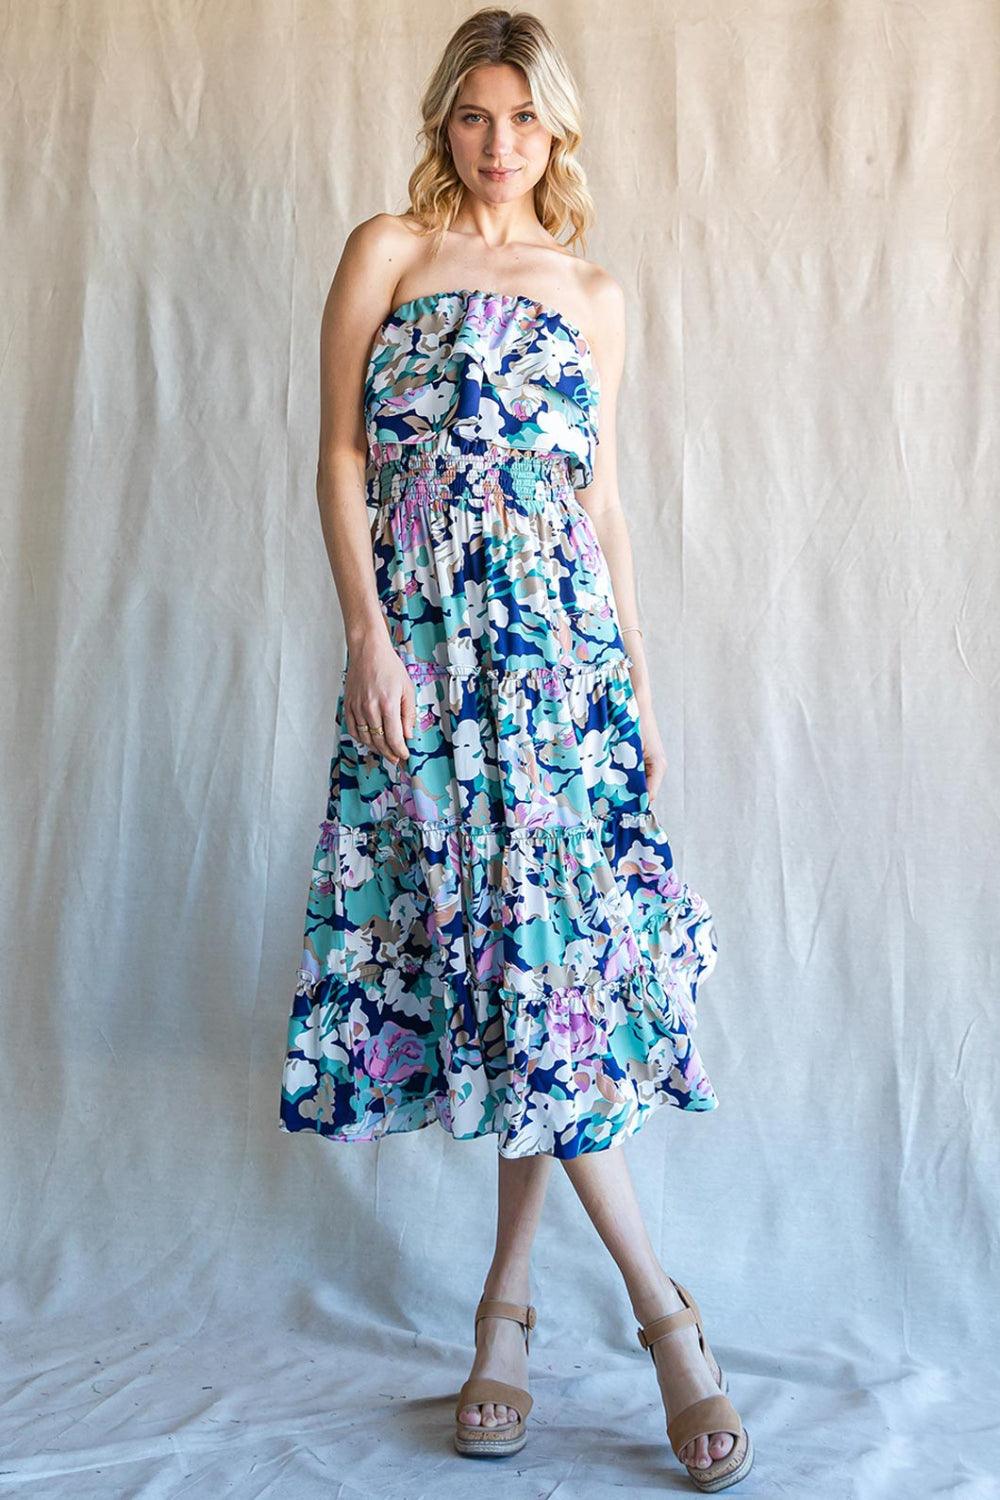 Cotton Bleu by Nu Label Ruffled Floral Midi Dress - AMIClubwear